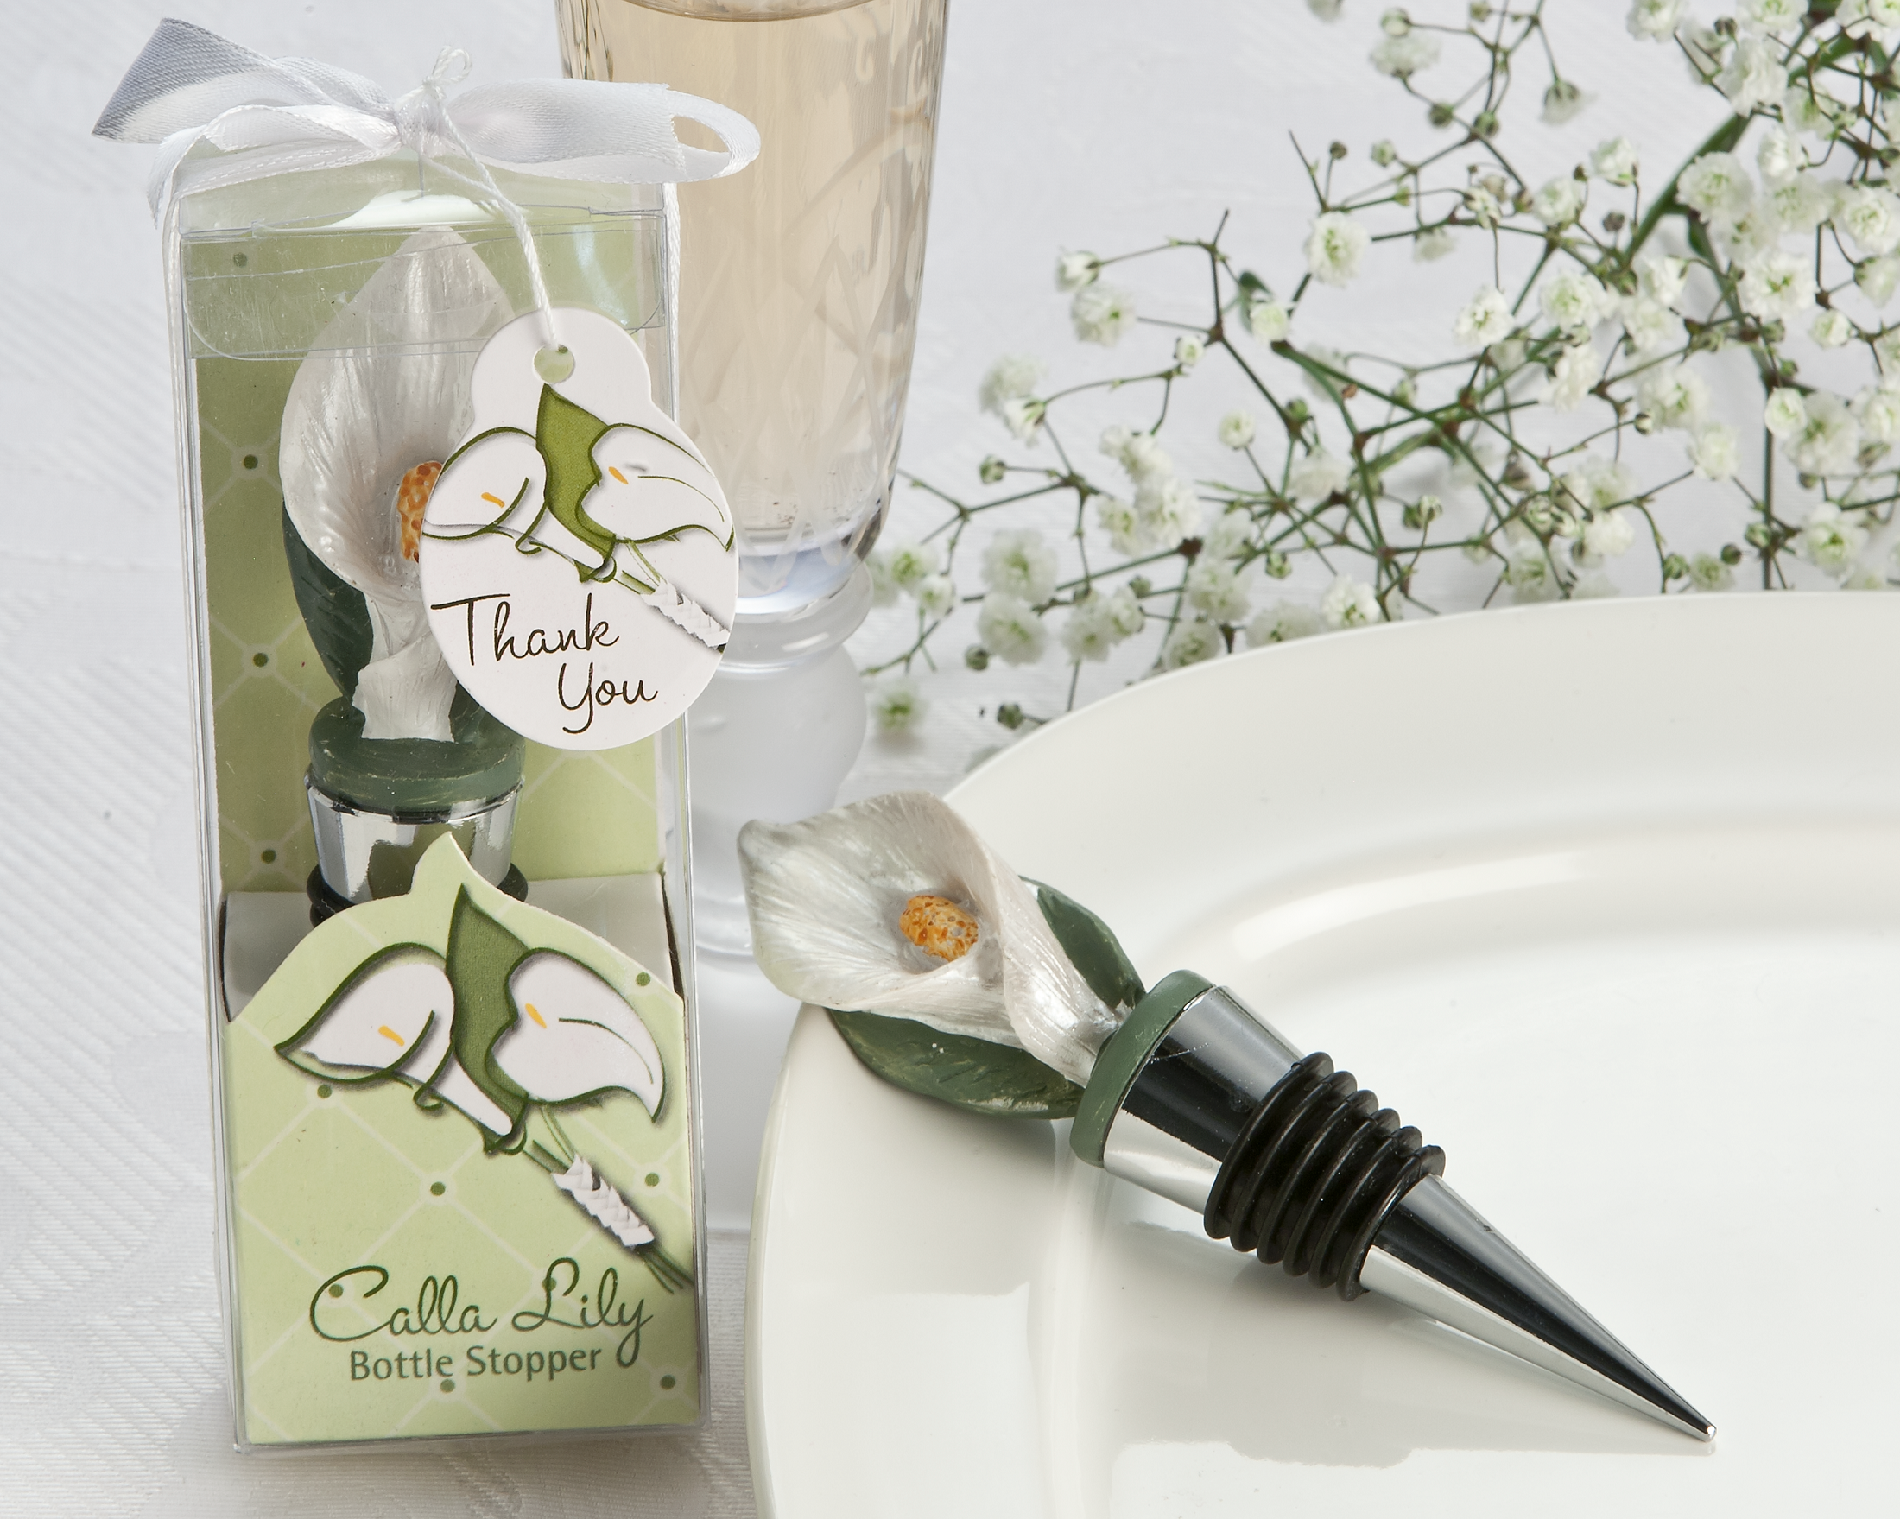 "Pure Elegance" Calla Lily Bottle Stopper in Designer Floral Gift Box [Case Pack of 100]